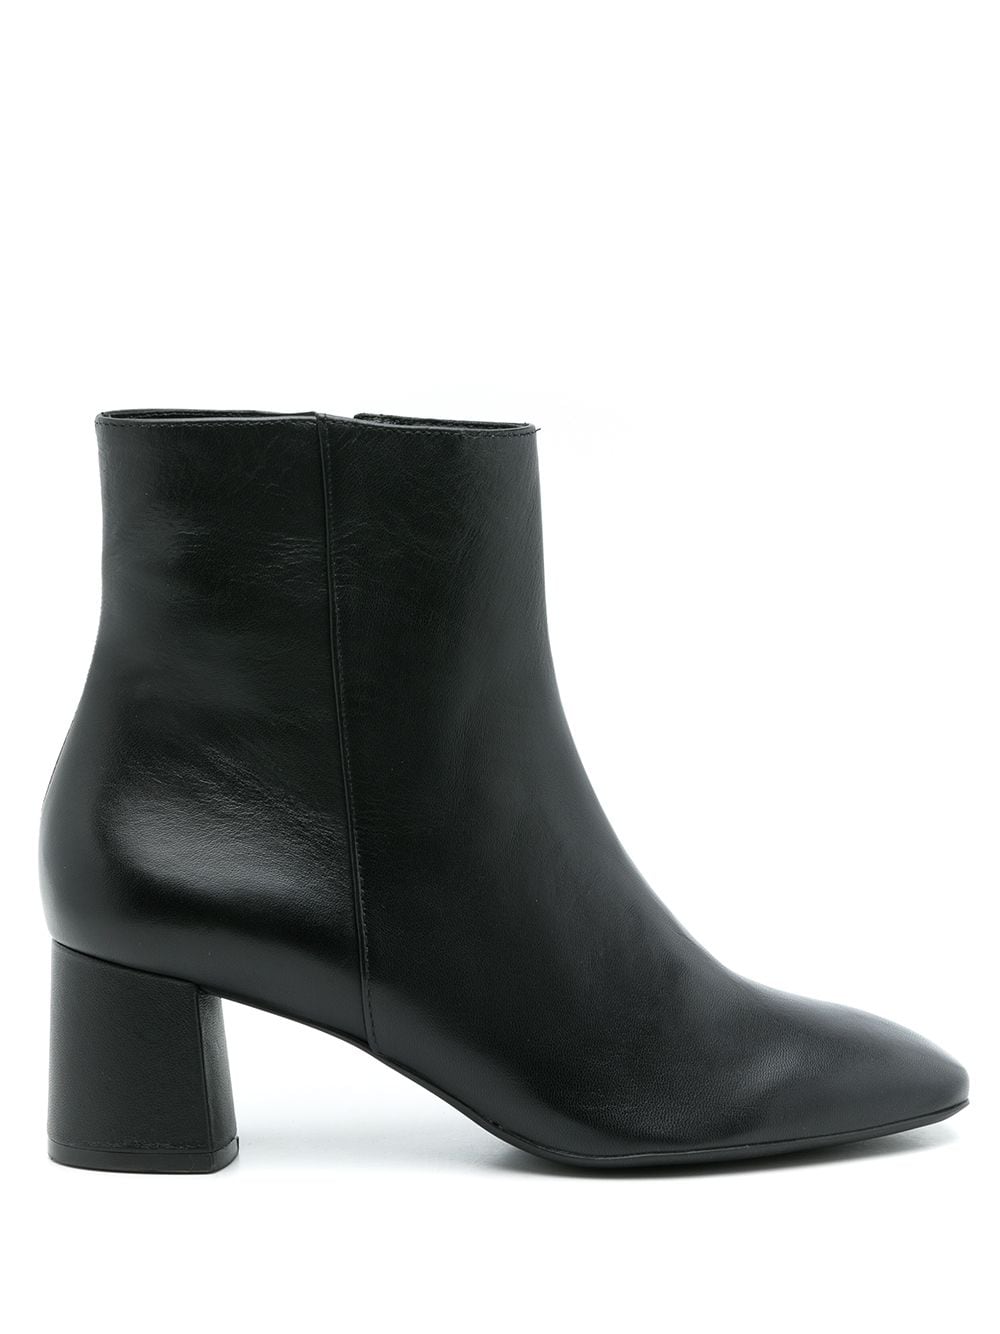 Image 1 of Sarah Chofakian Torquay leather boots